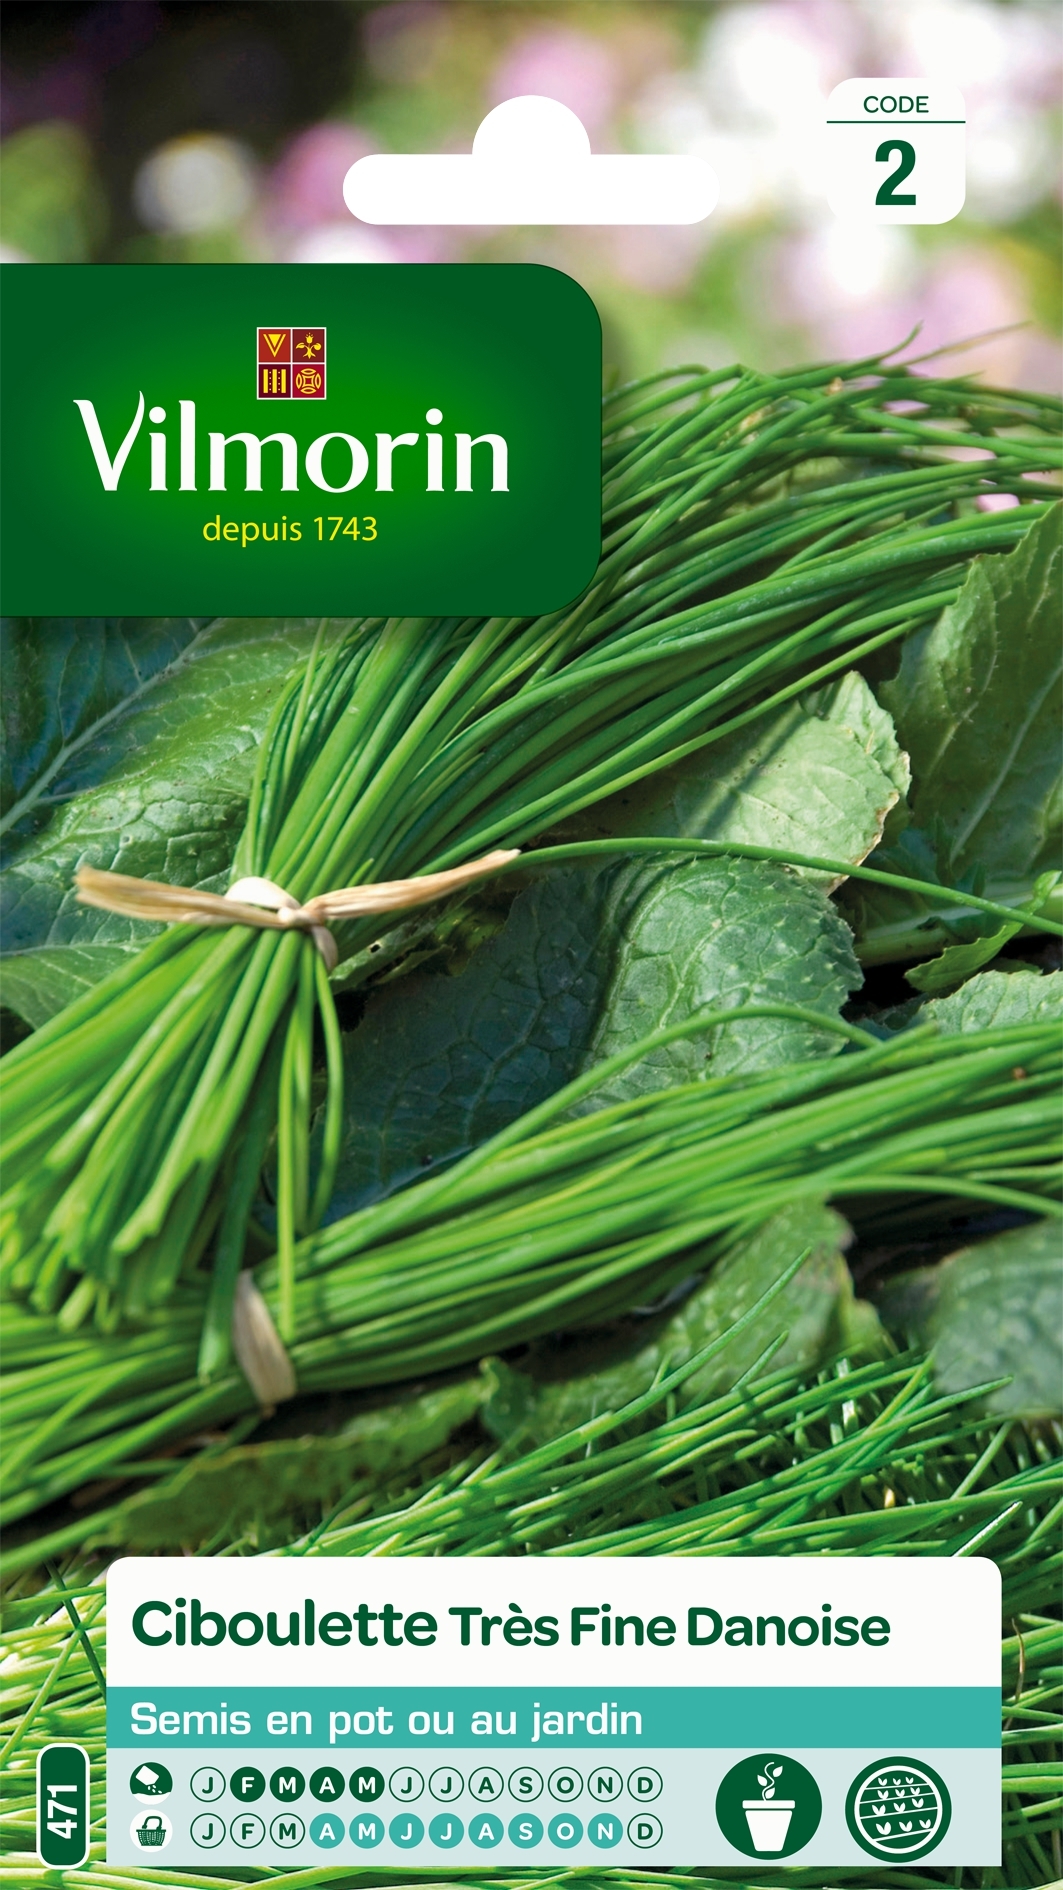 Ciboulette très fine danoise - Vilmorin